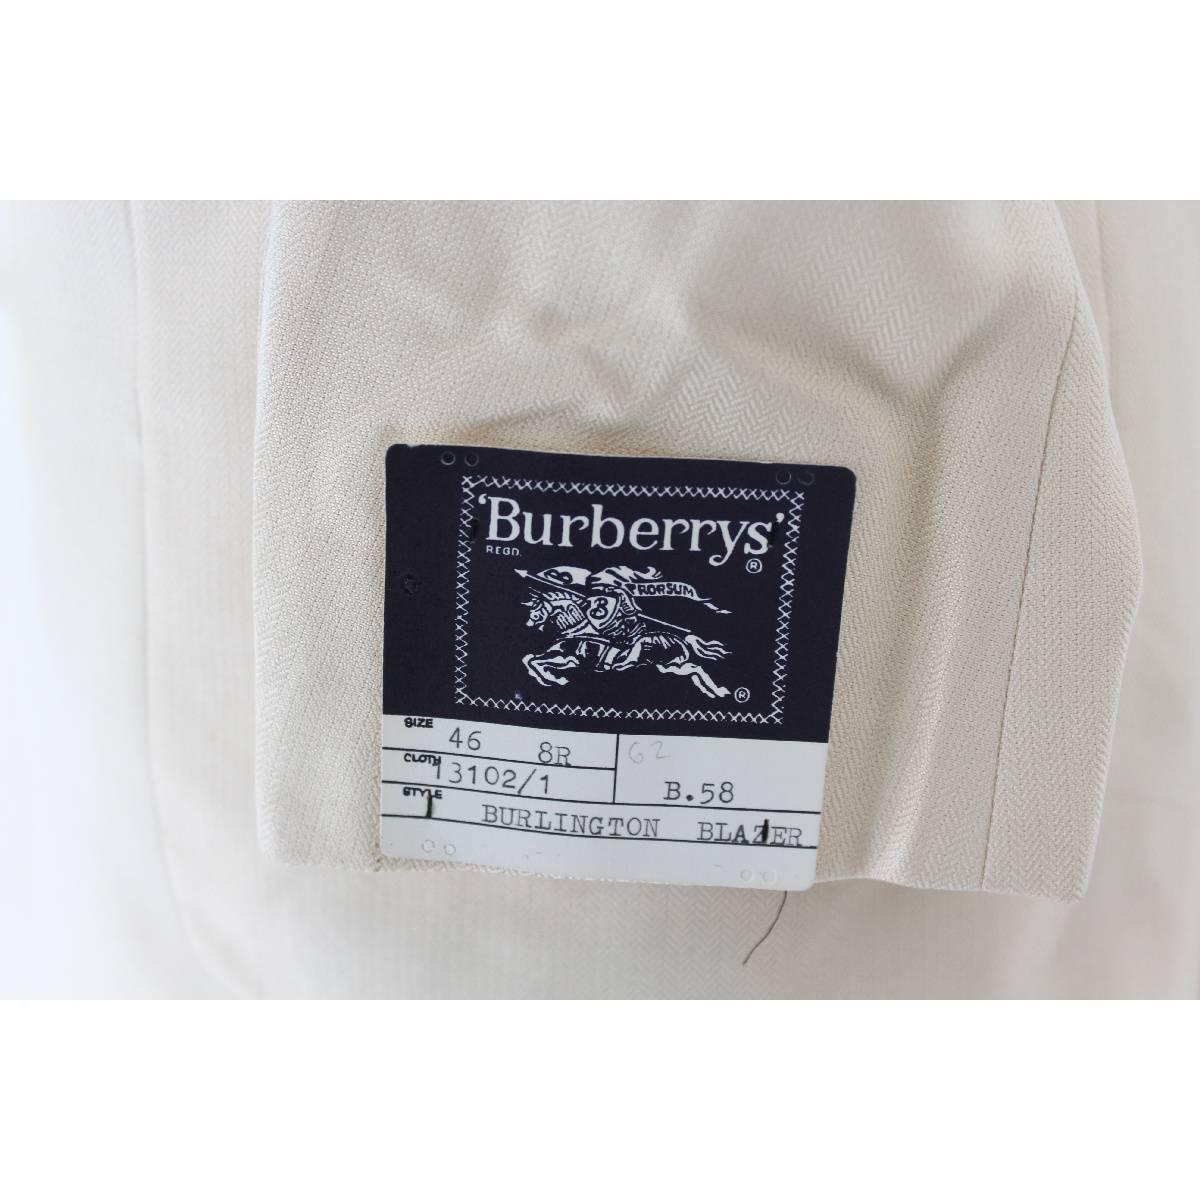 Men's Nwt Burberry vintage jacket double-breasted burlington 100% silk men’s size 46 i